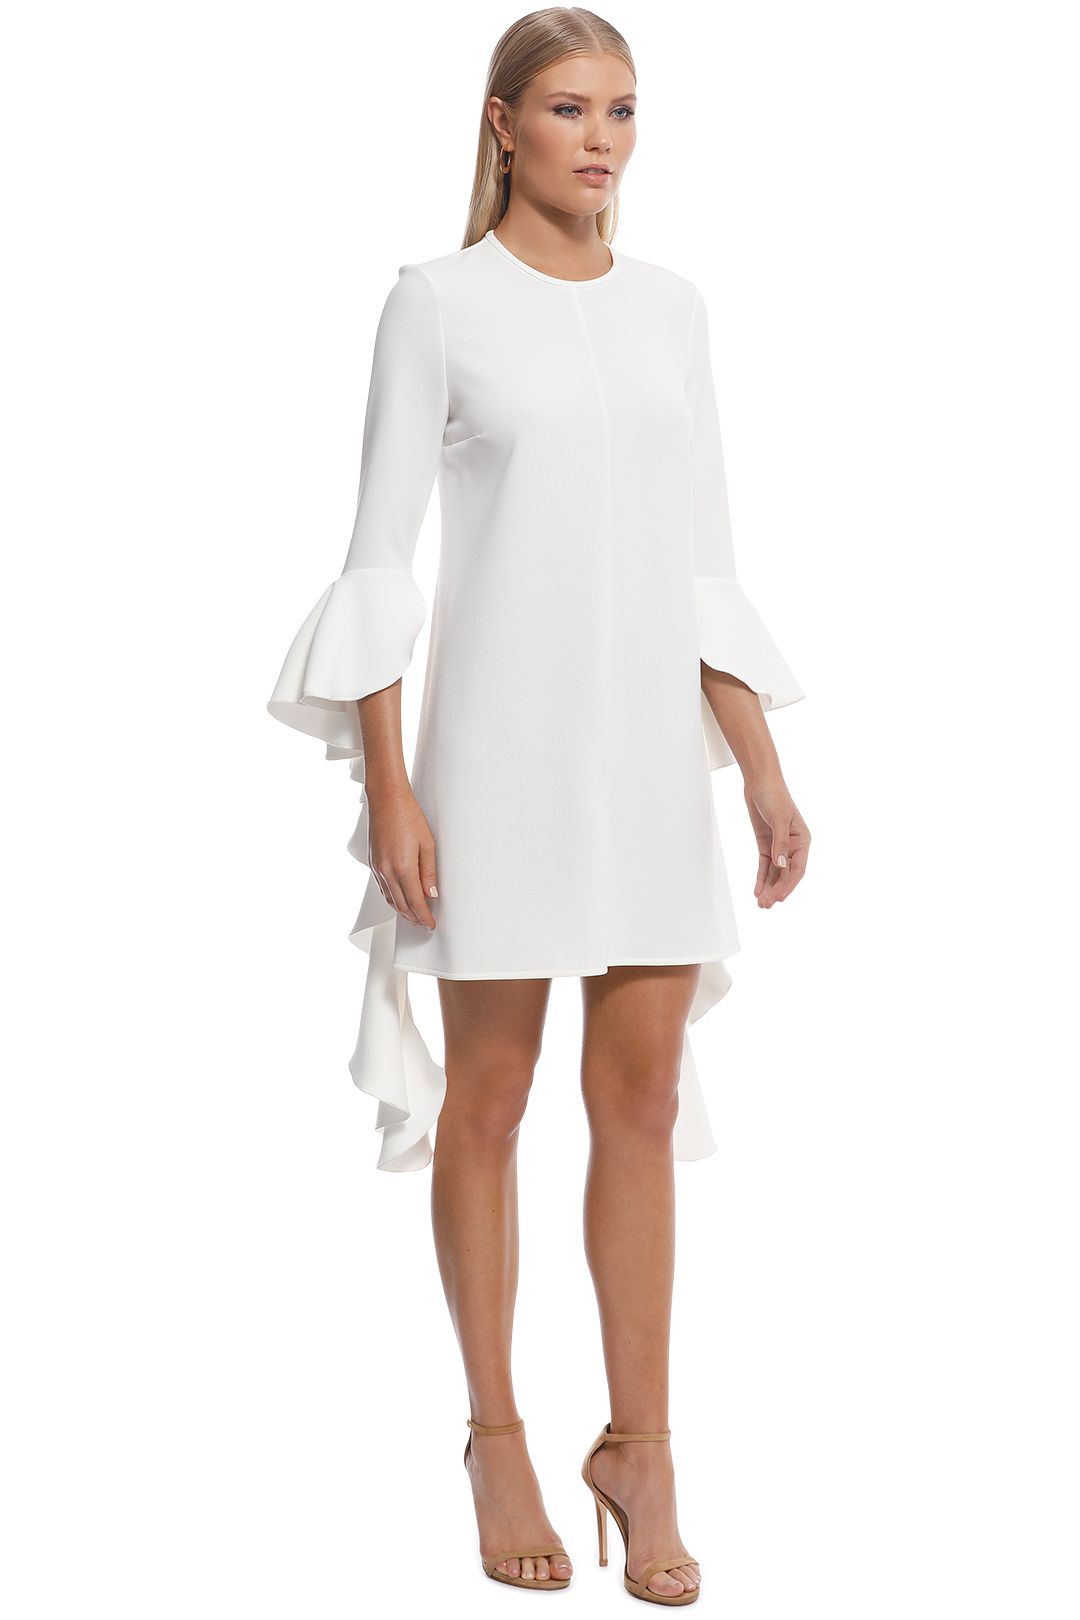 Ellery - Kilkenny Frill Sleeve Mini Dress - Ivory - Side